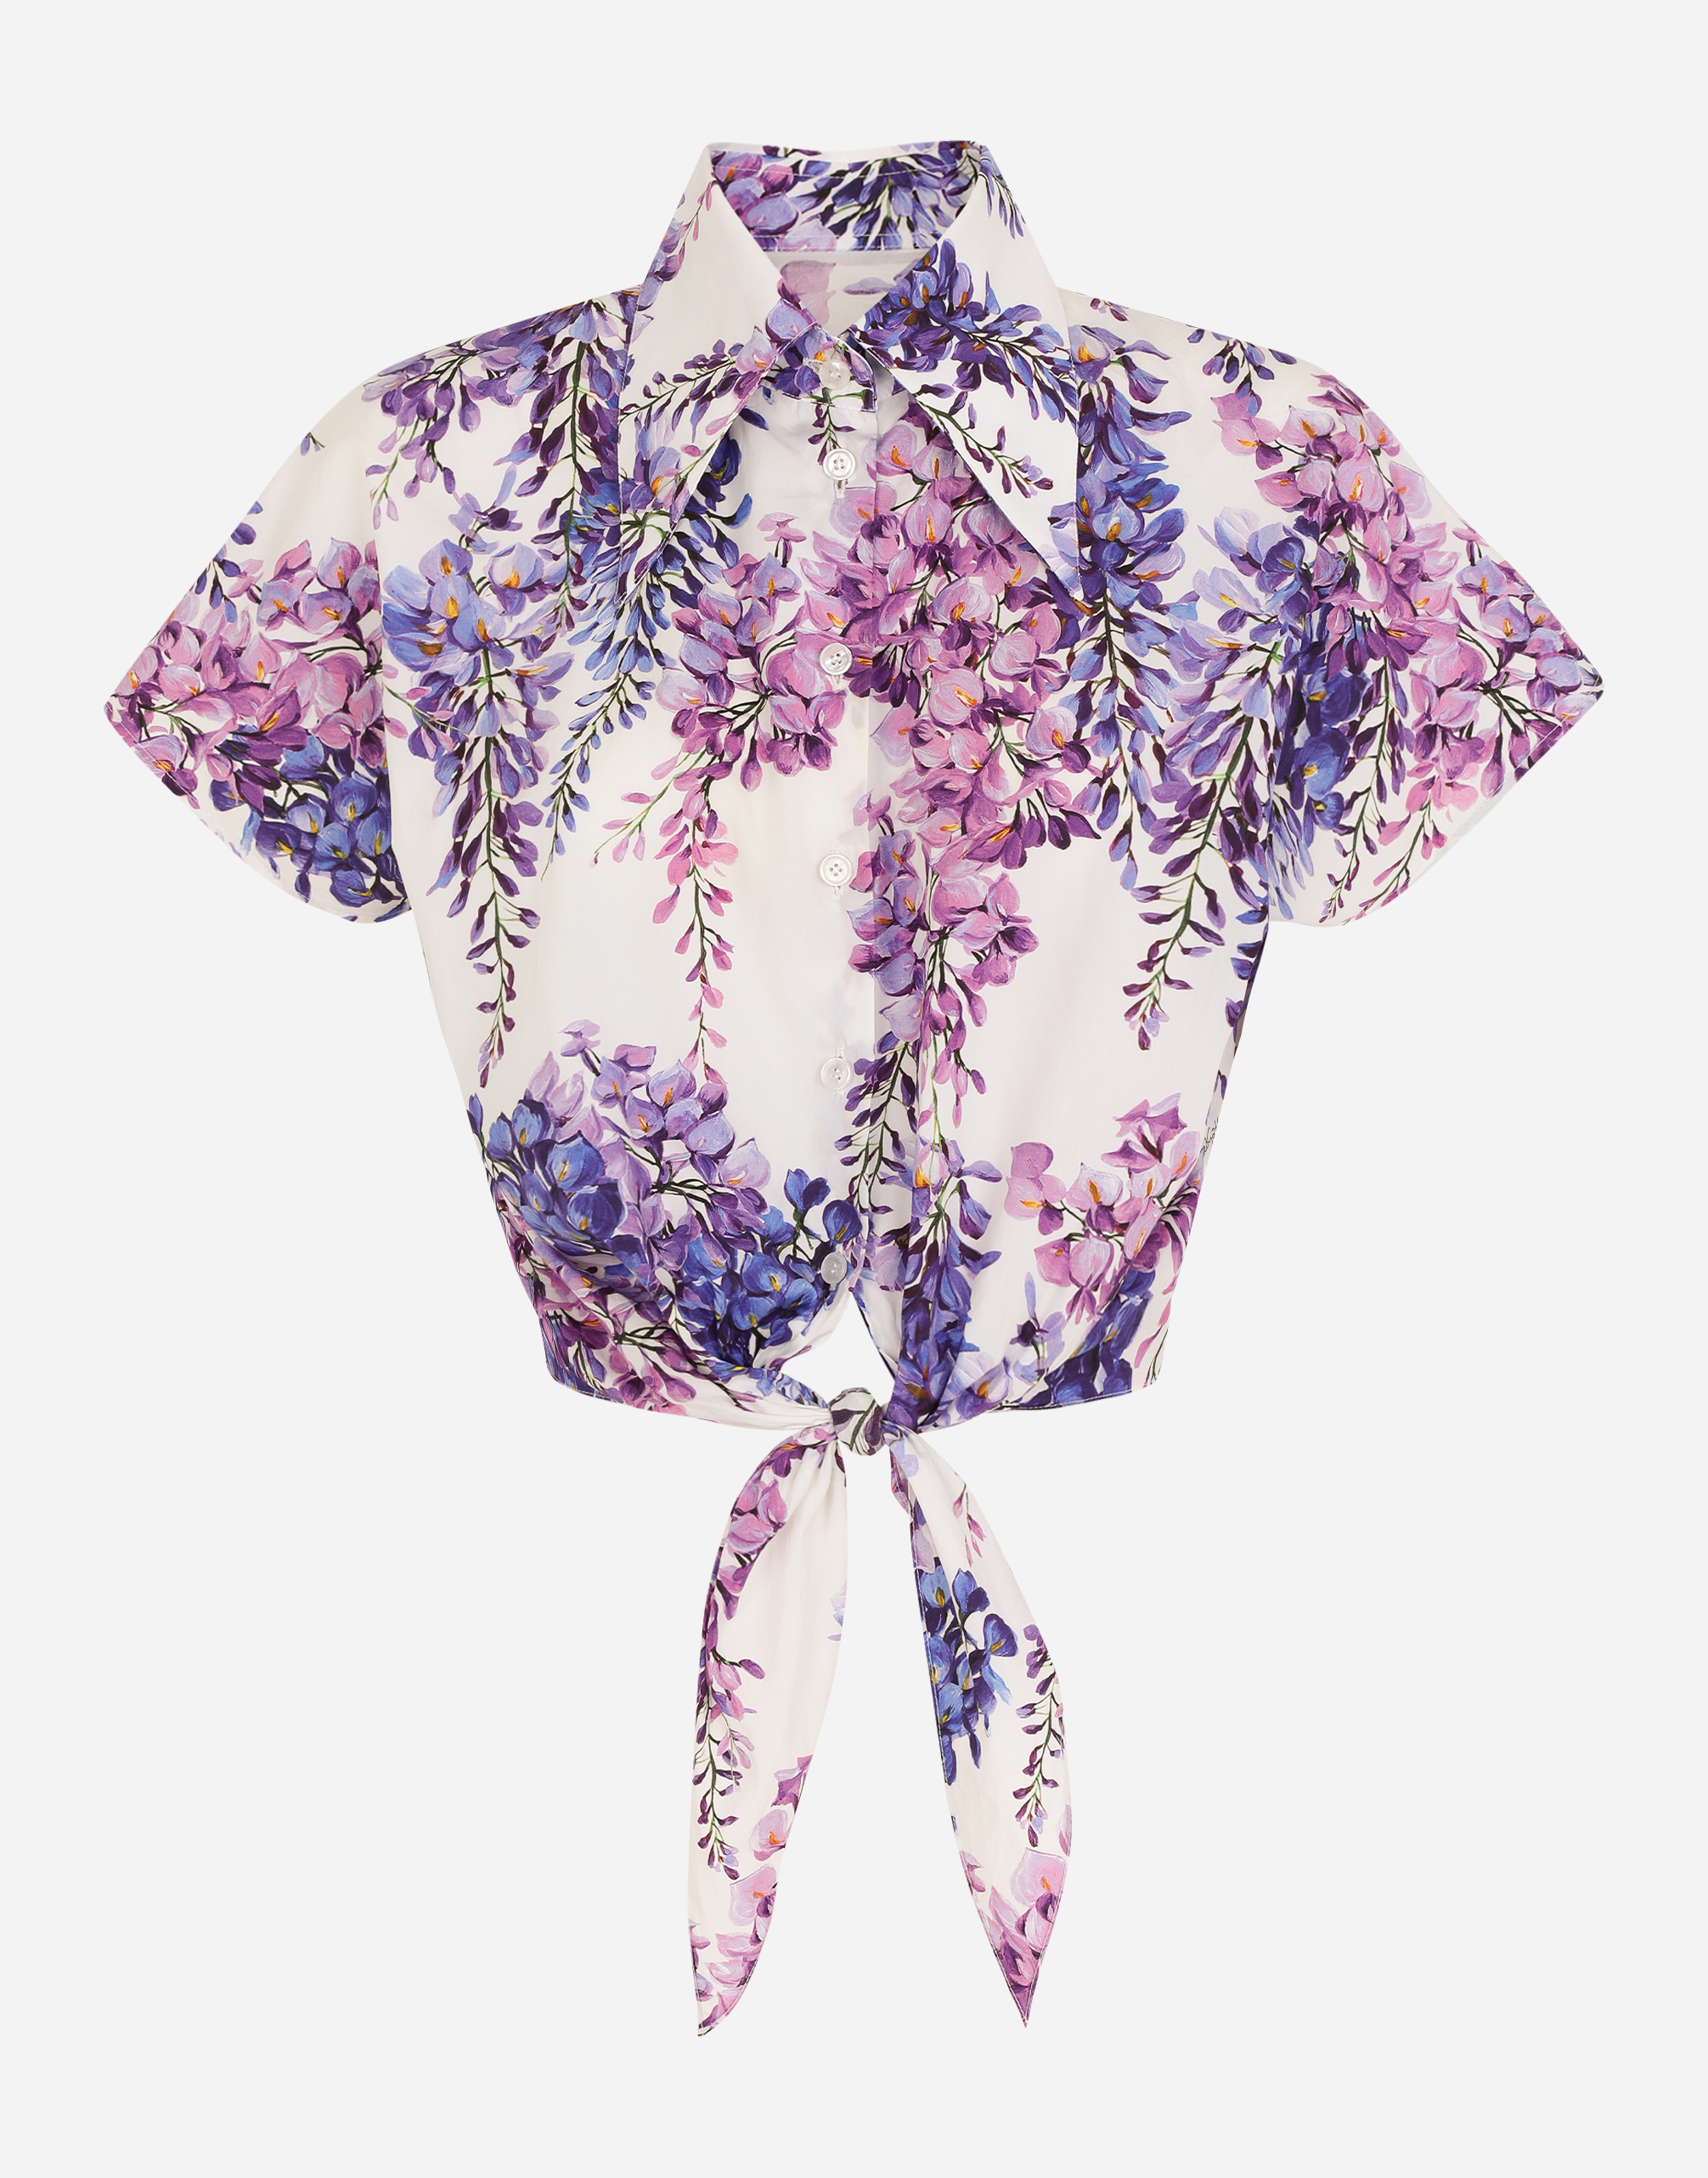 Wisteria-print poplin shirt with knot detail